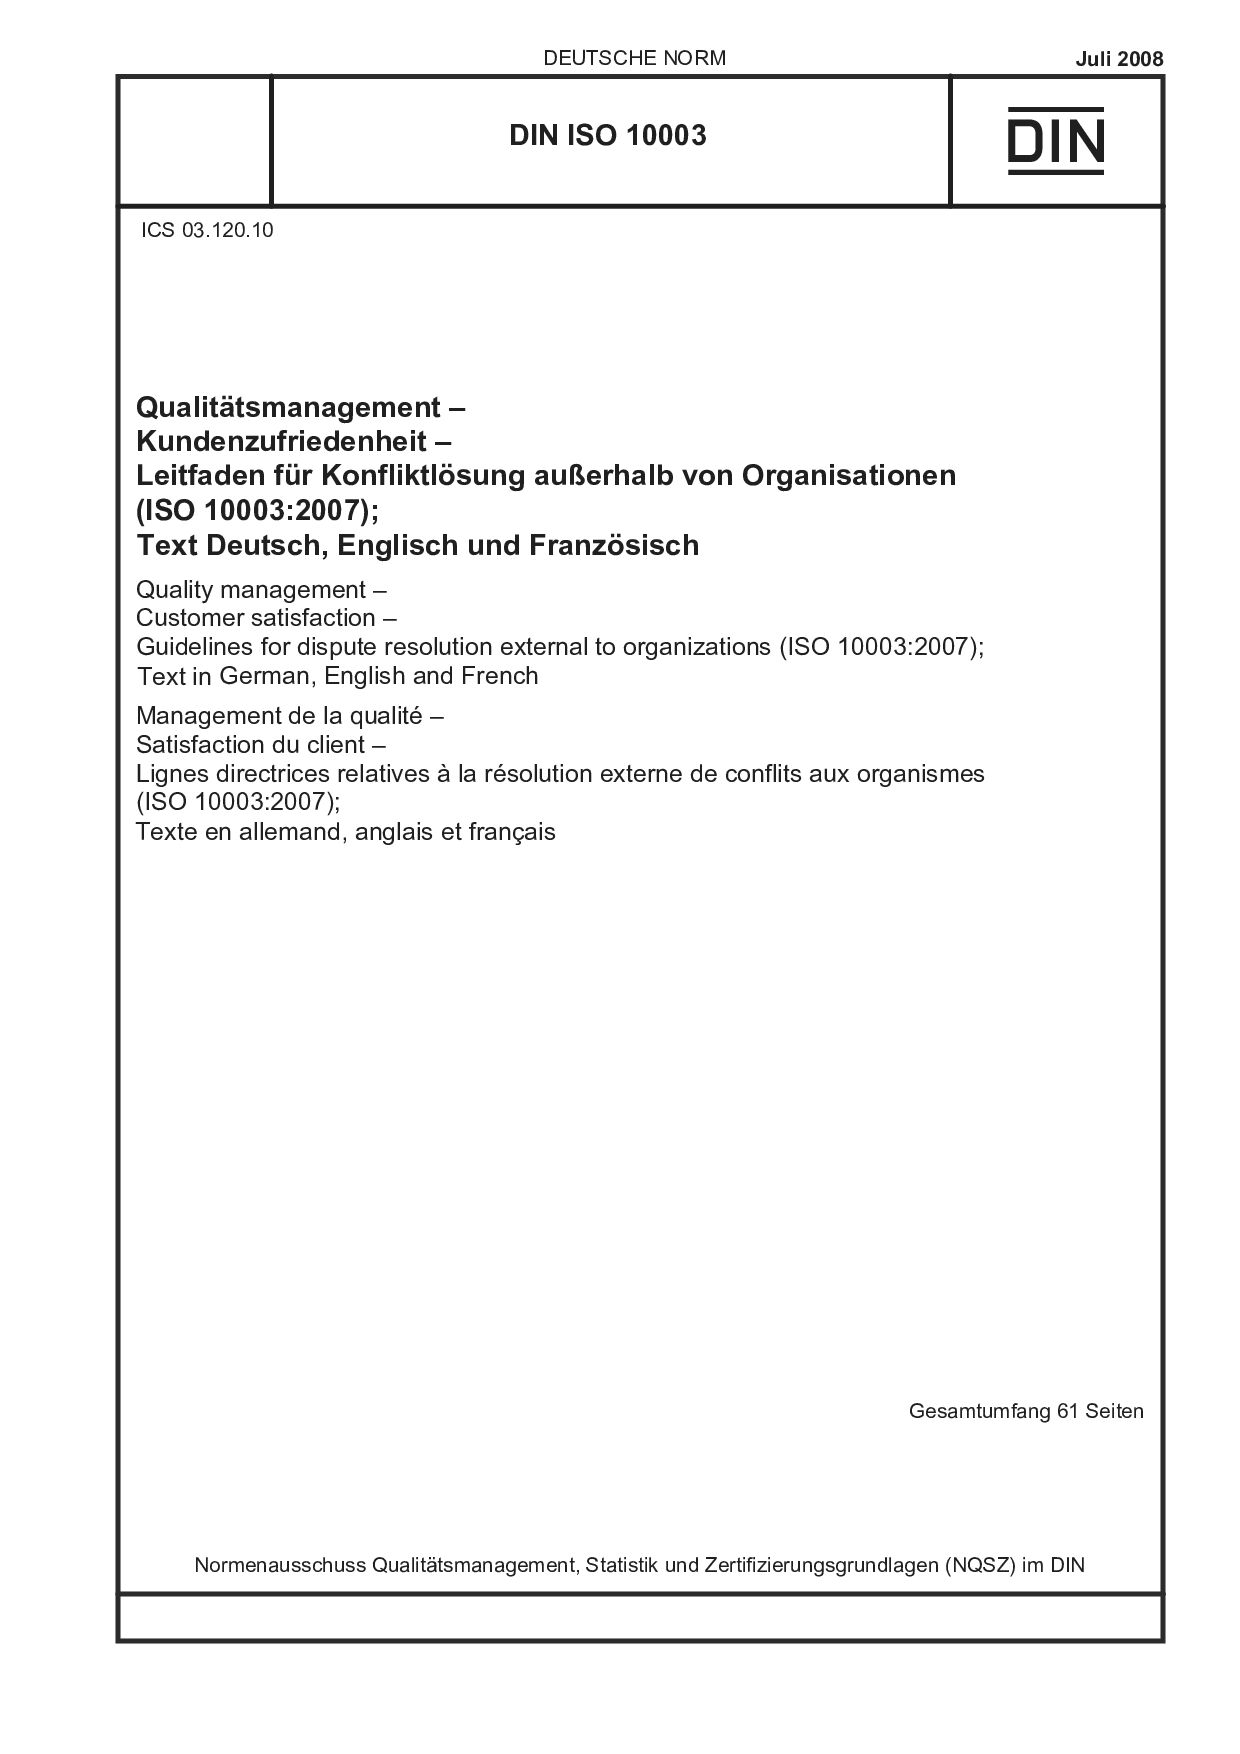 DIN ISO 10003:2008